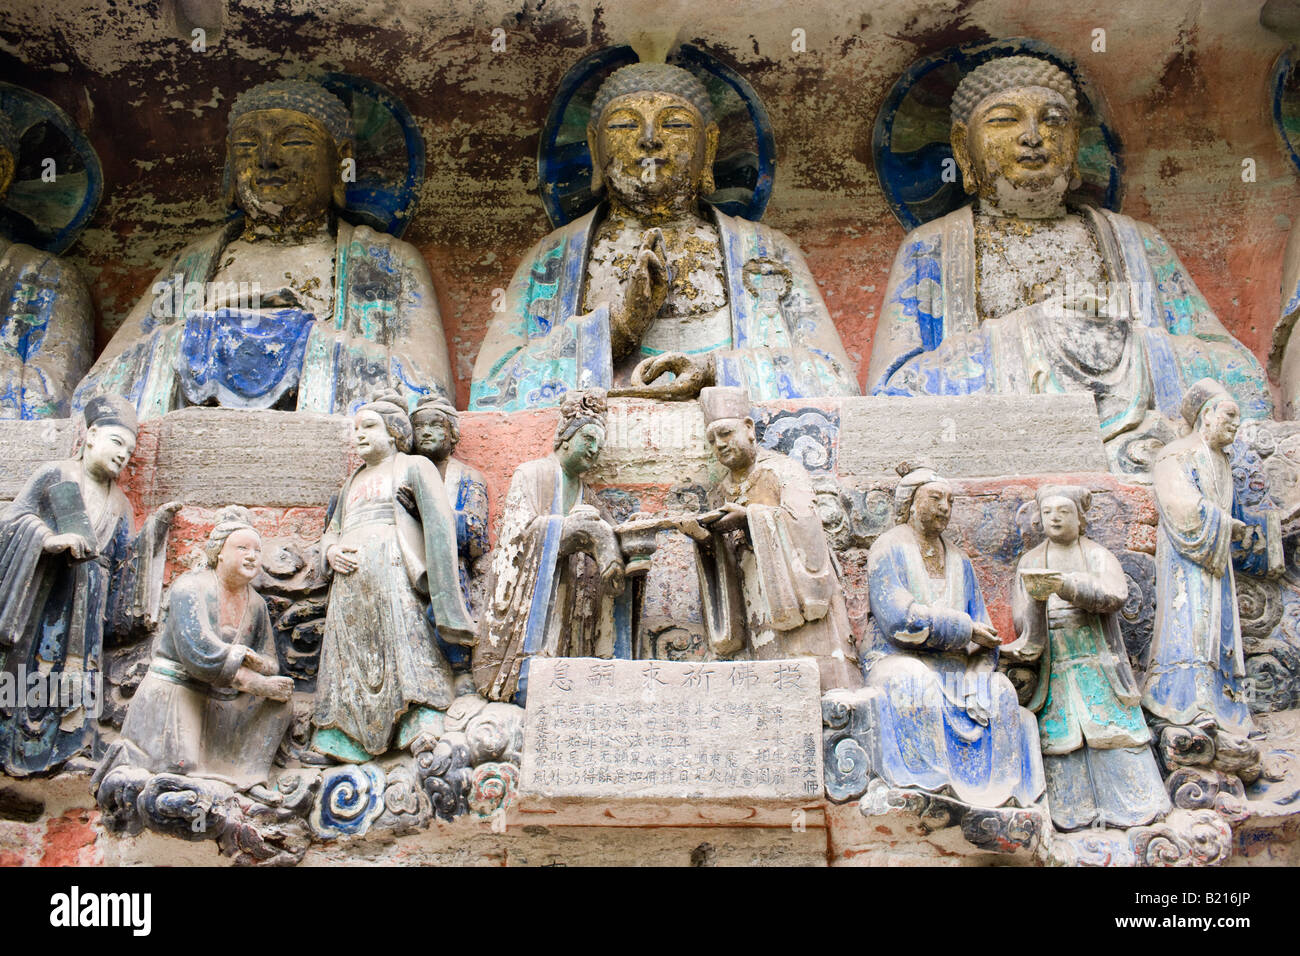 Felsschnitzereien Buddhas und religiöse Szene am Mount Baoding Chongqing China Stockfoto